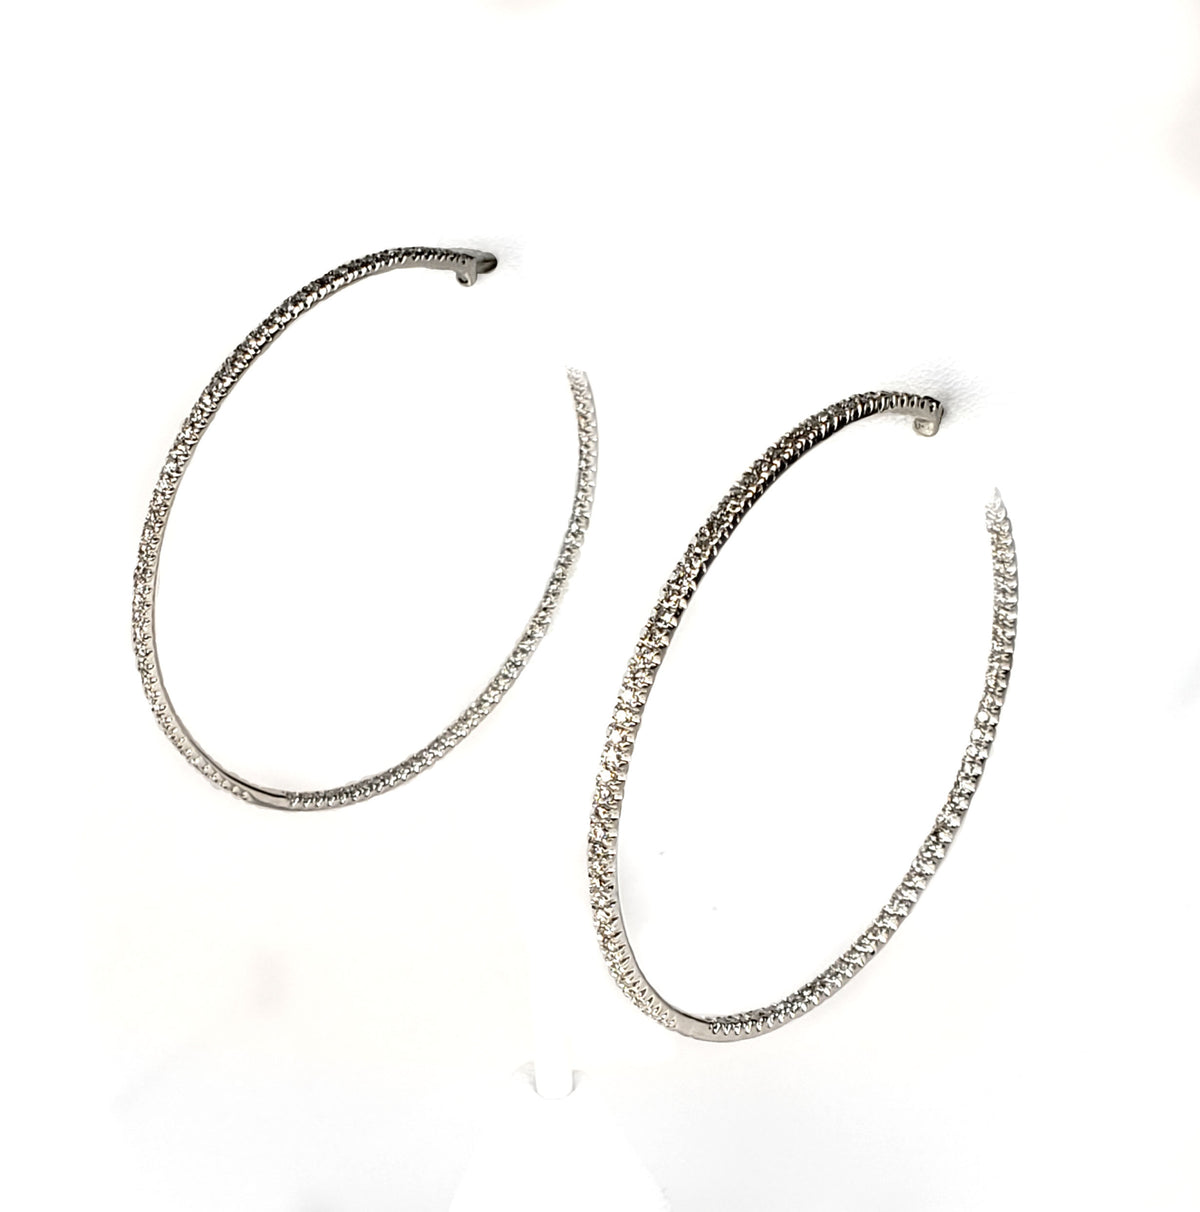 18kt Gold Diamond Hoop Earrings